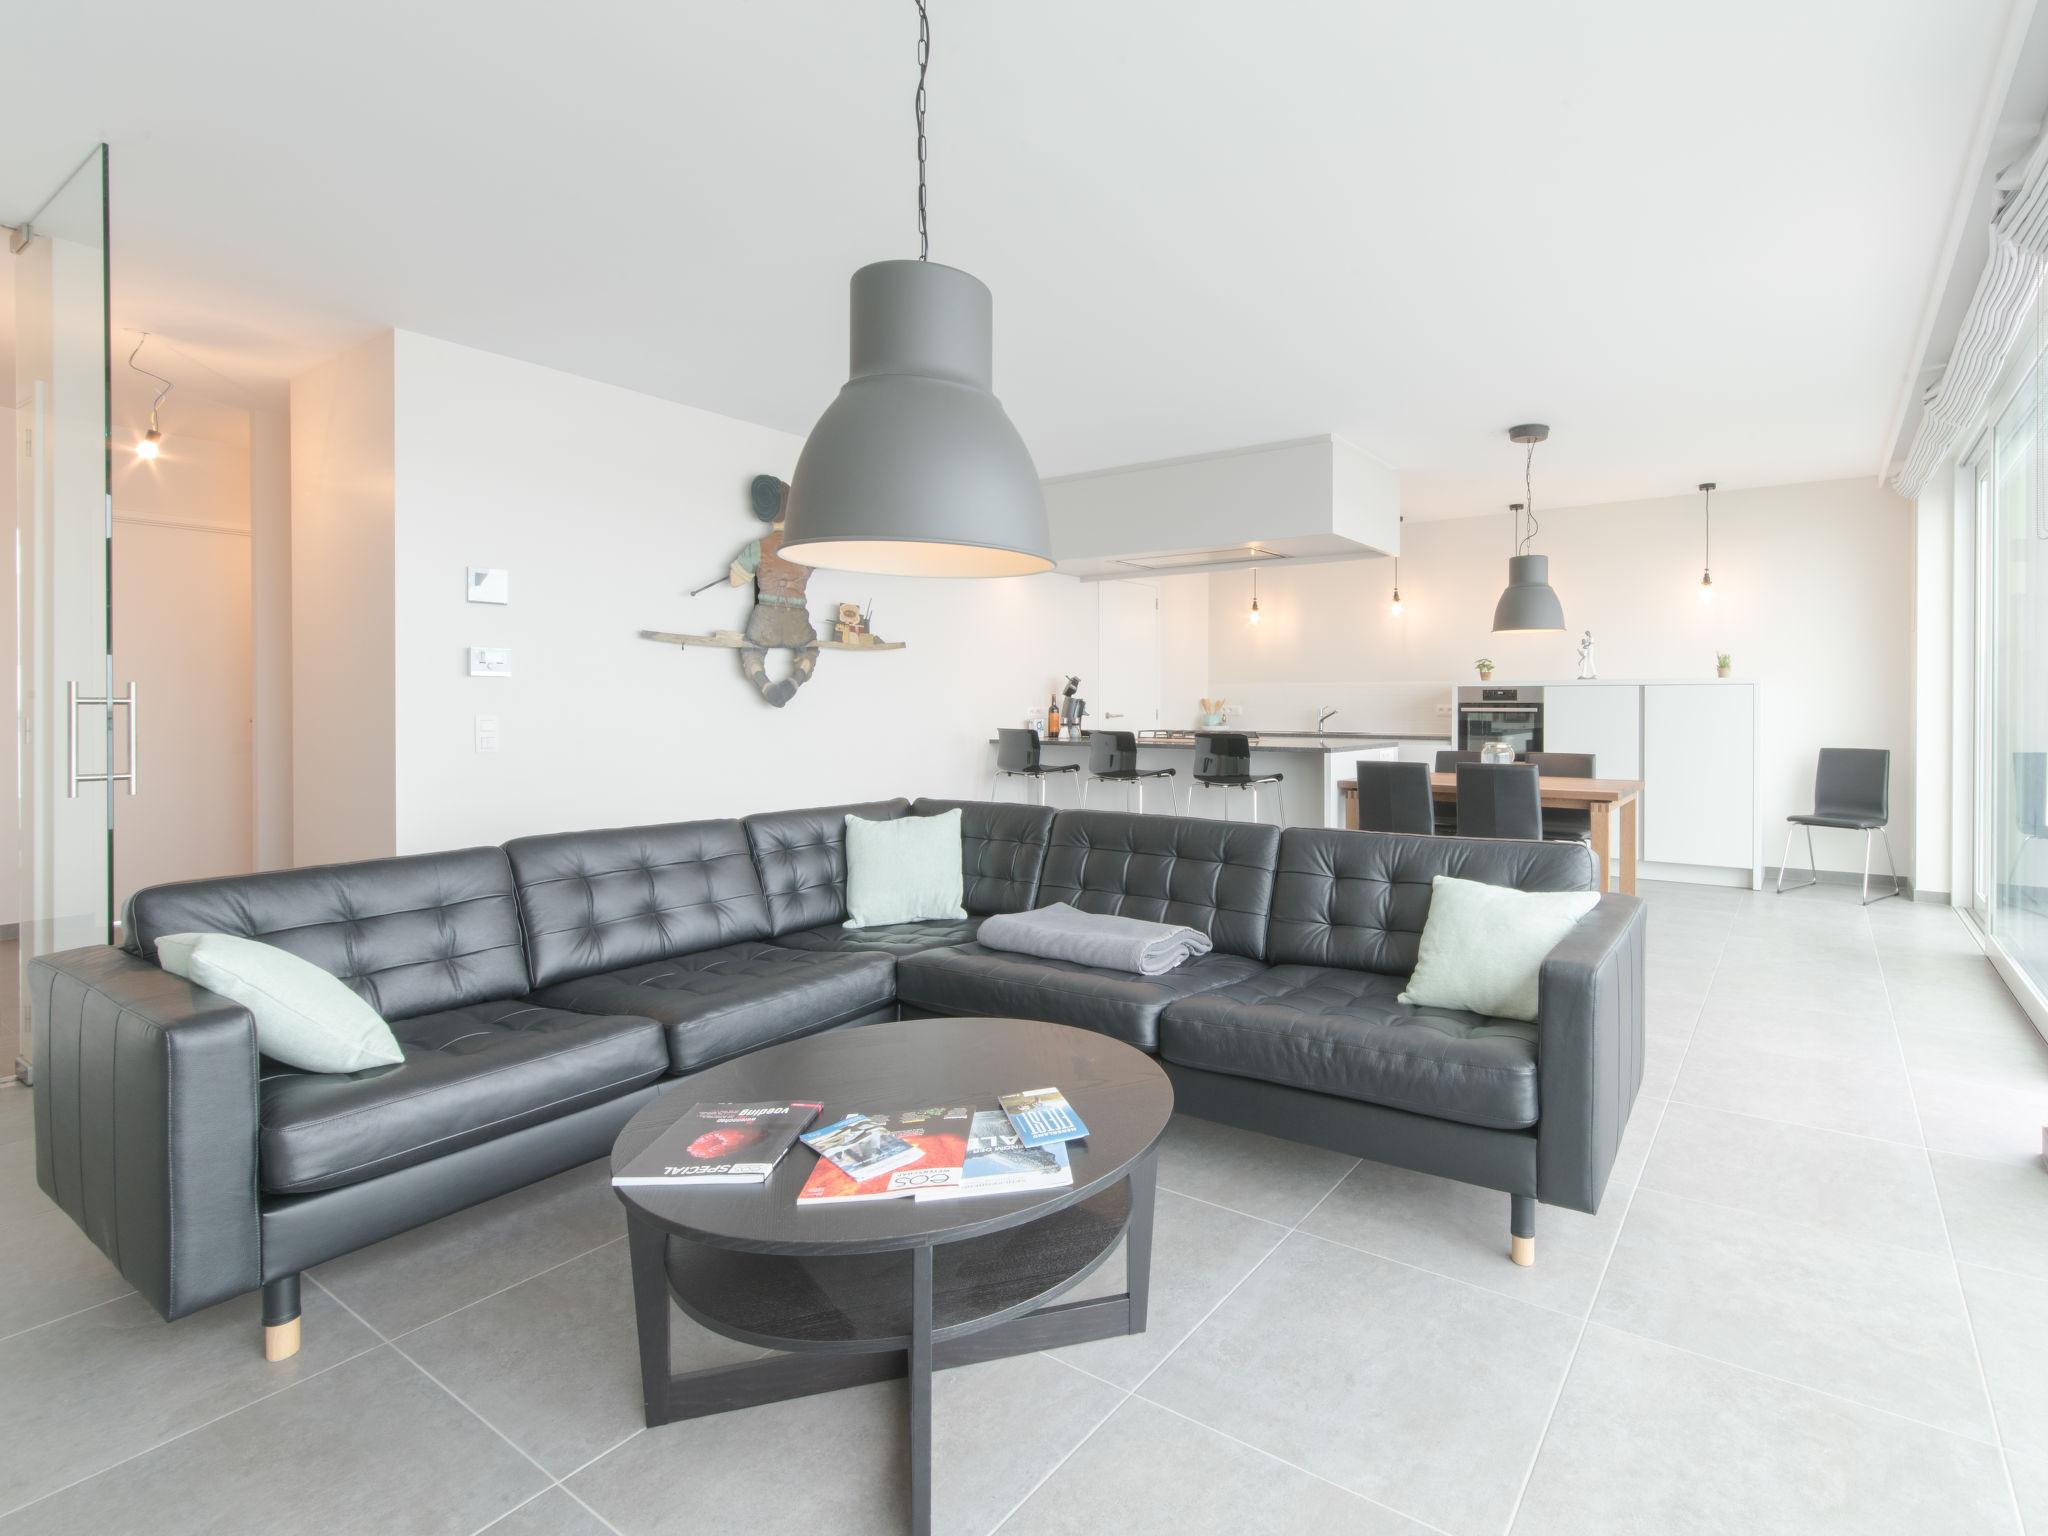 Photo 1 - 2 bedroom Apartment in Bredene with terrace